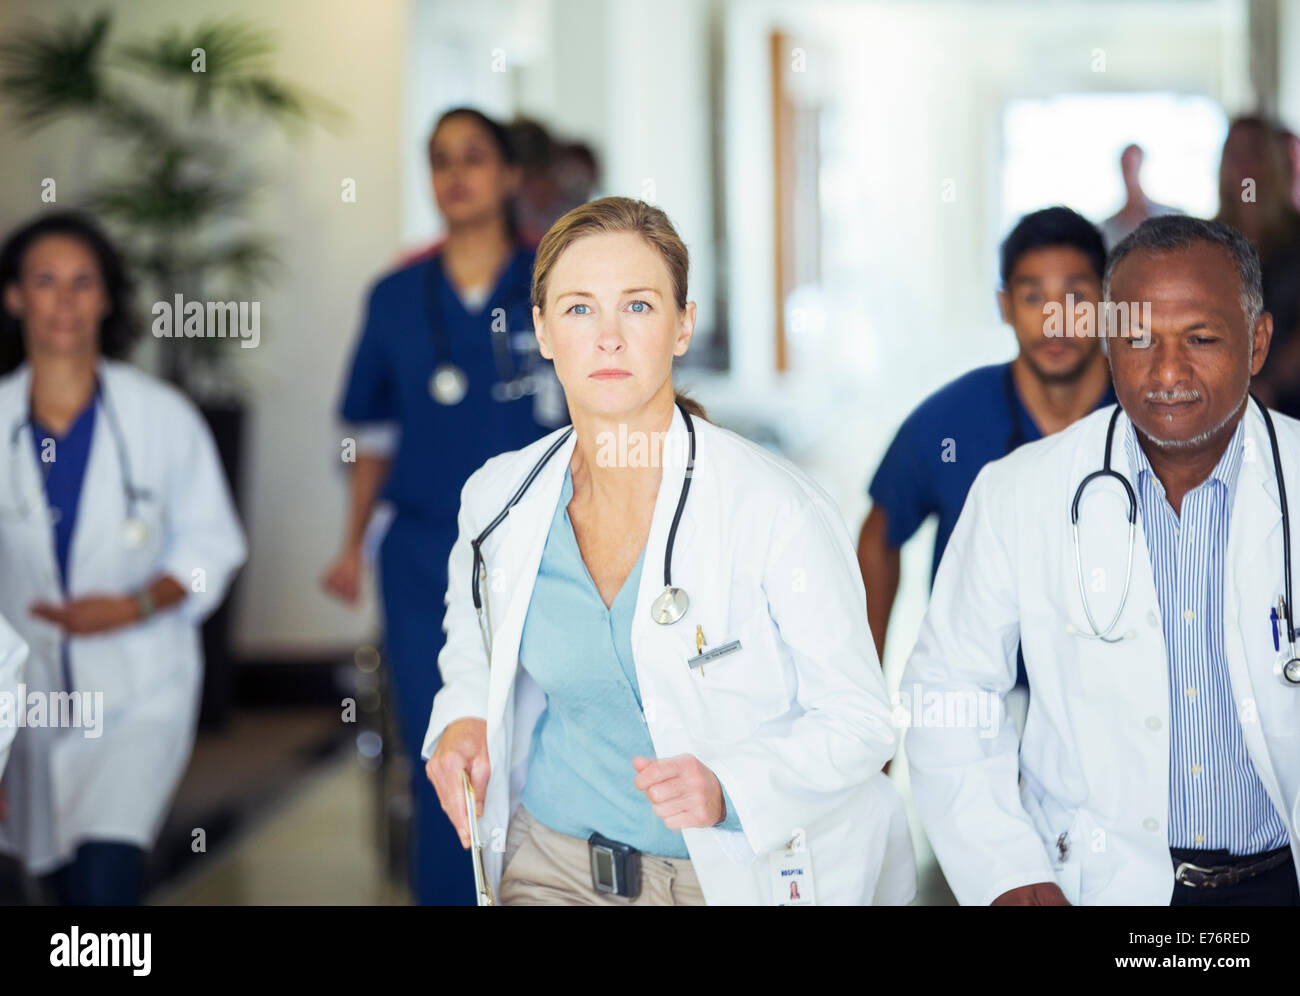 Doctors rushing in hospital hallway Stock Photo